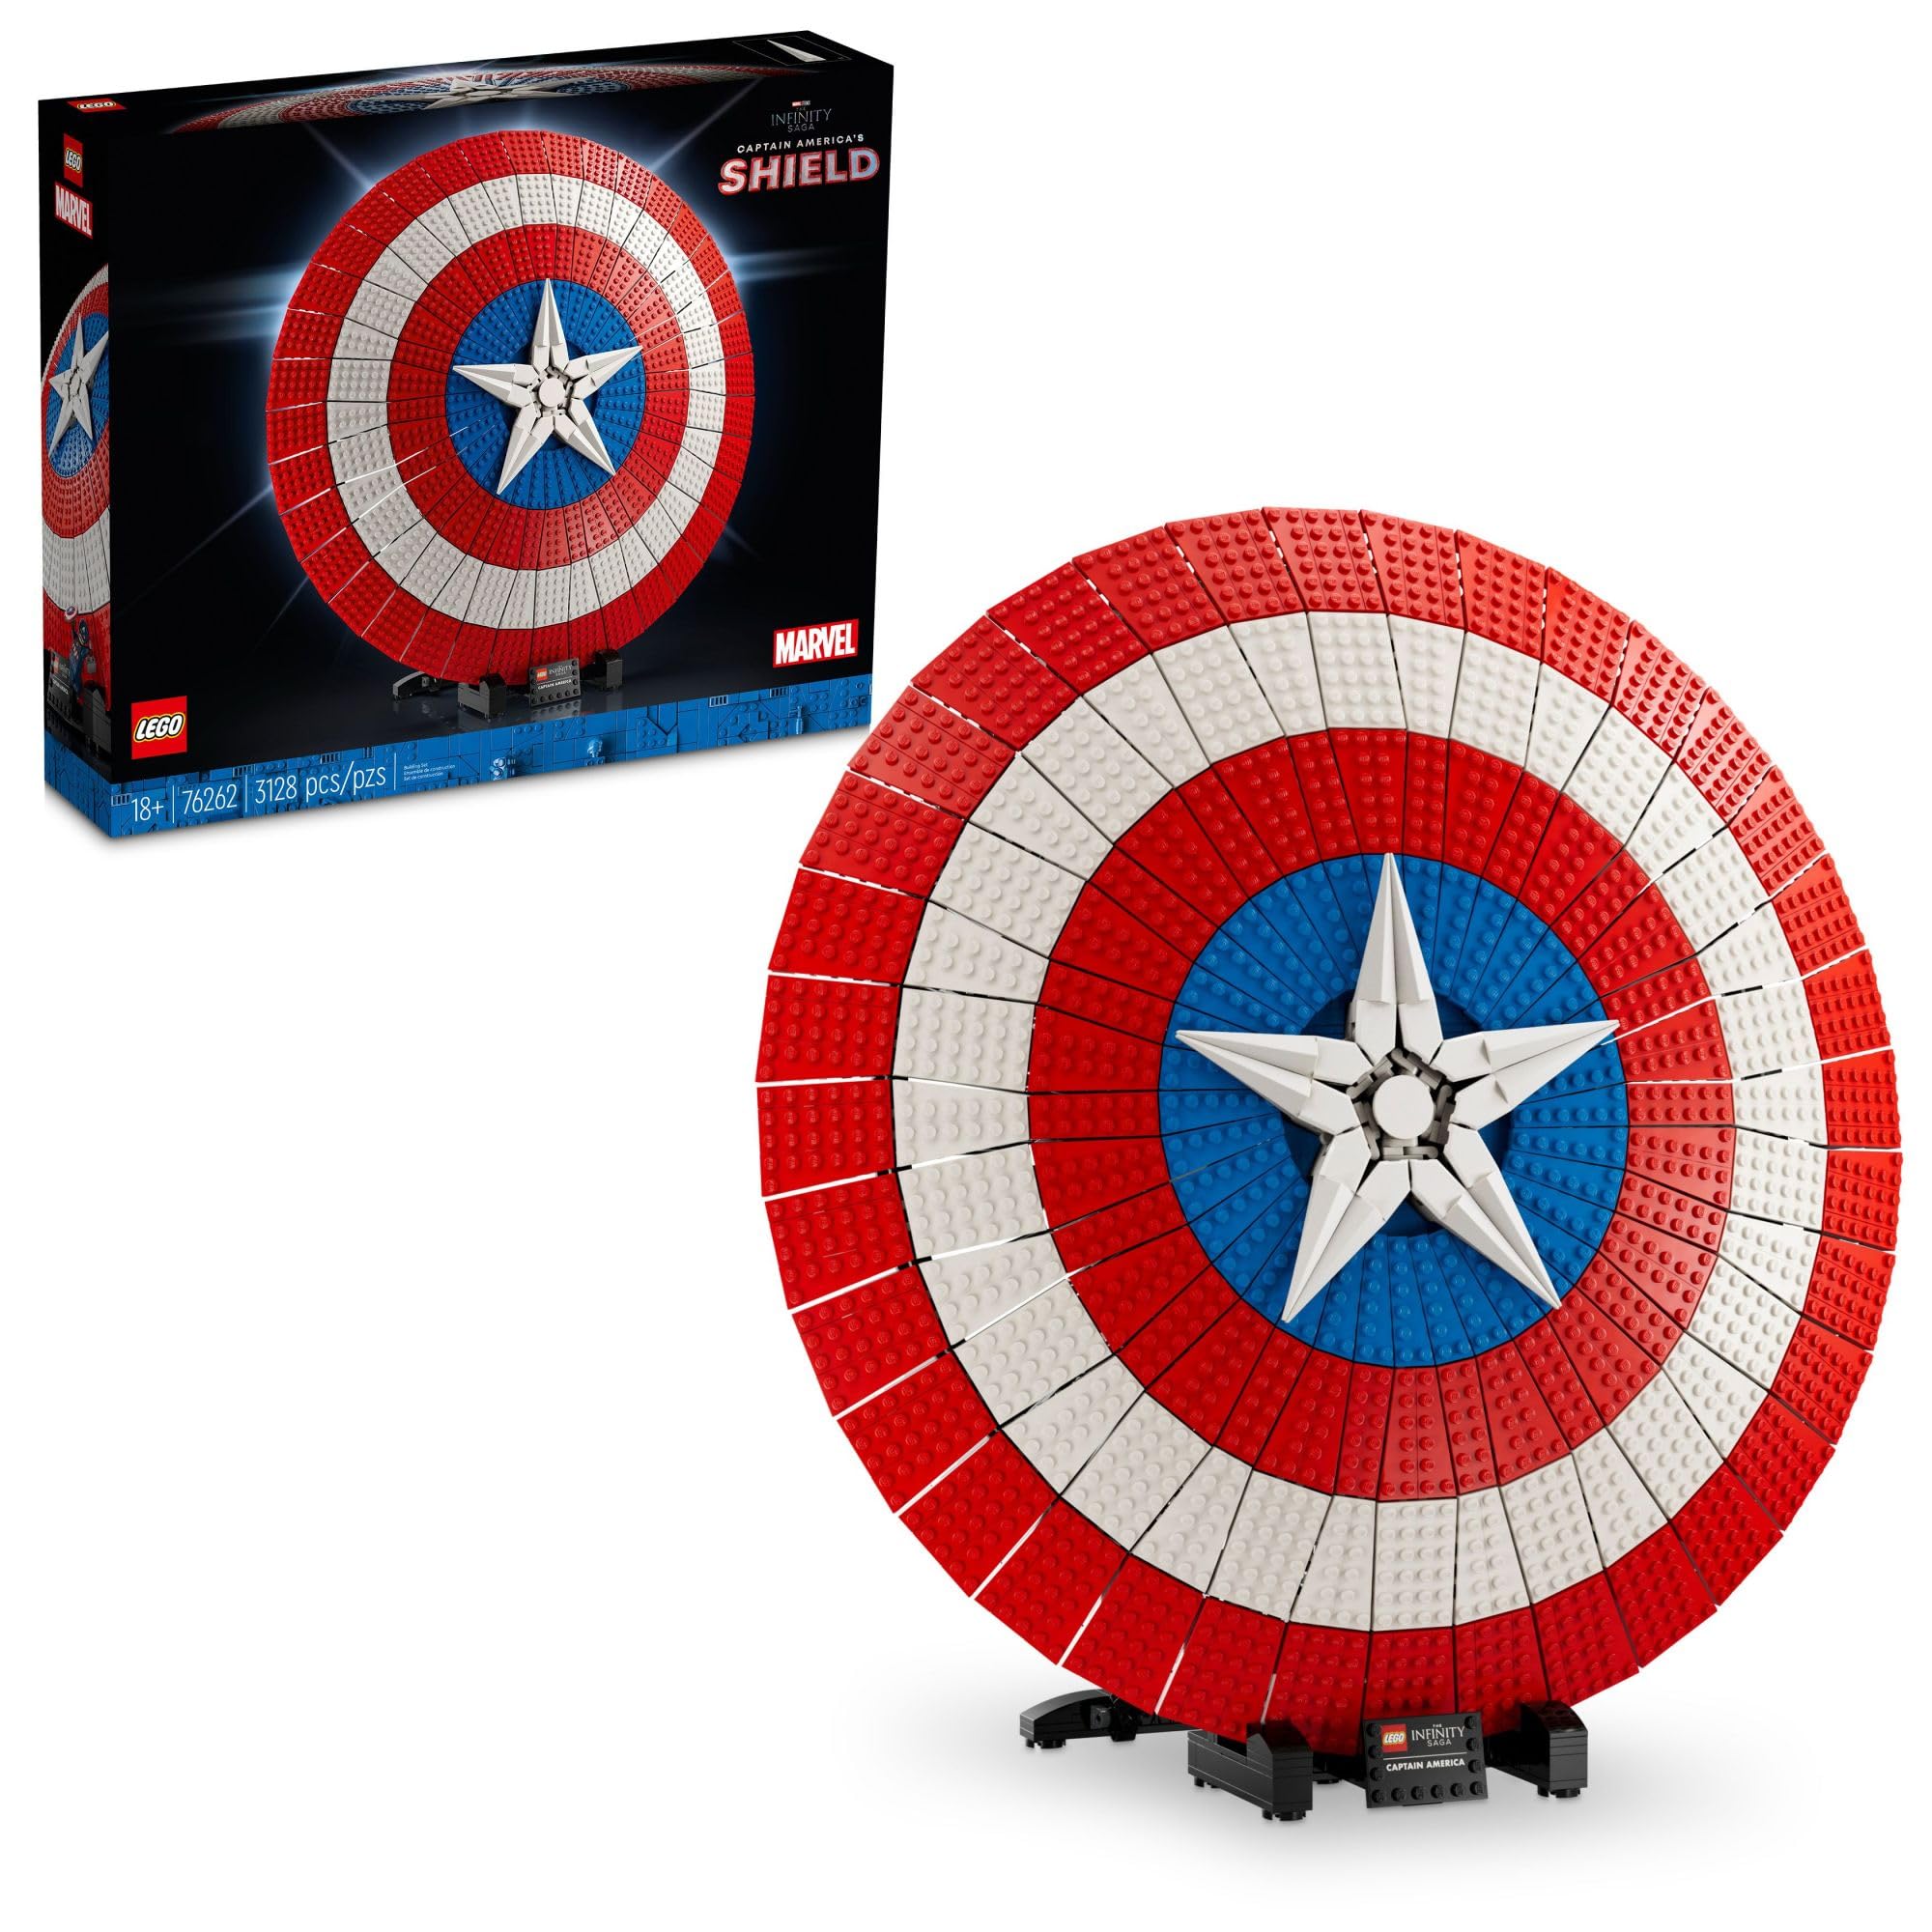 3,128-Piece LEGO Marvel Captain America’s Shield $120 + Free Shipping